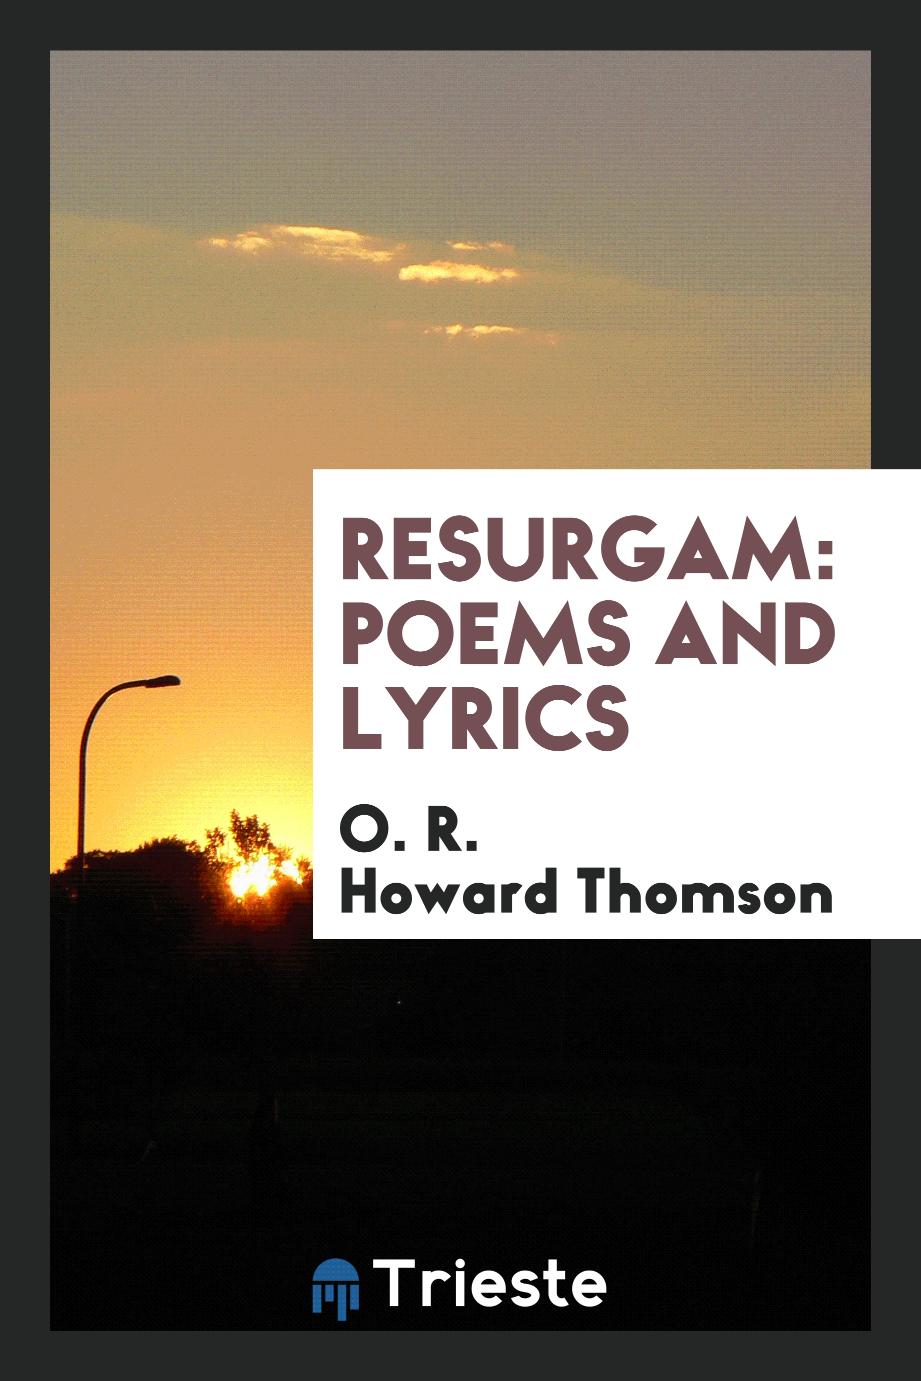 Resurgam: poems and lyrics